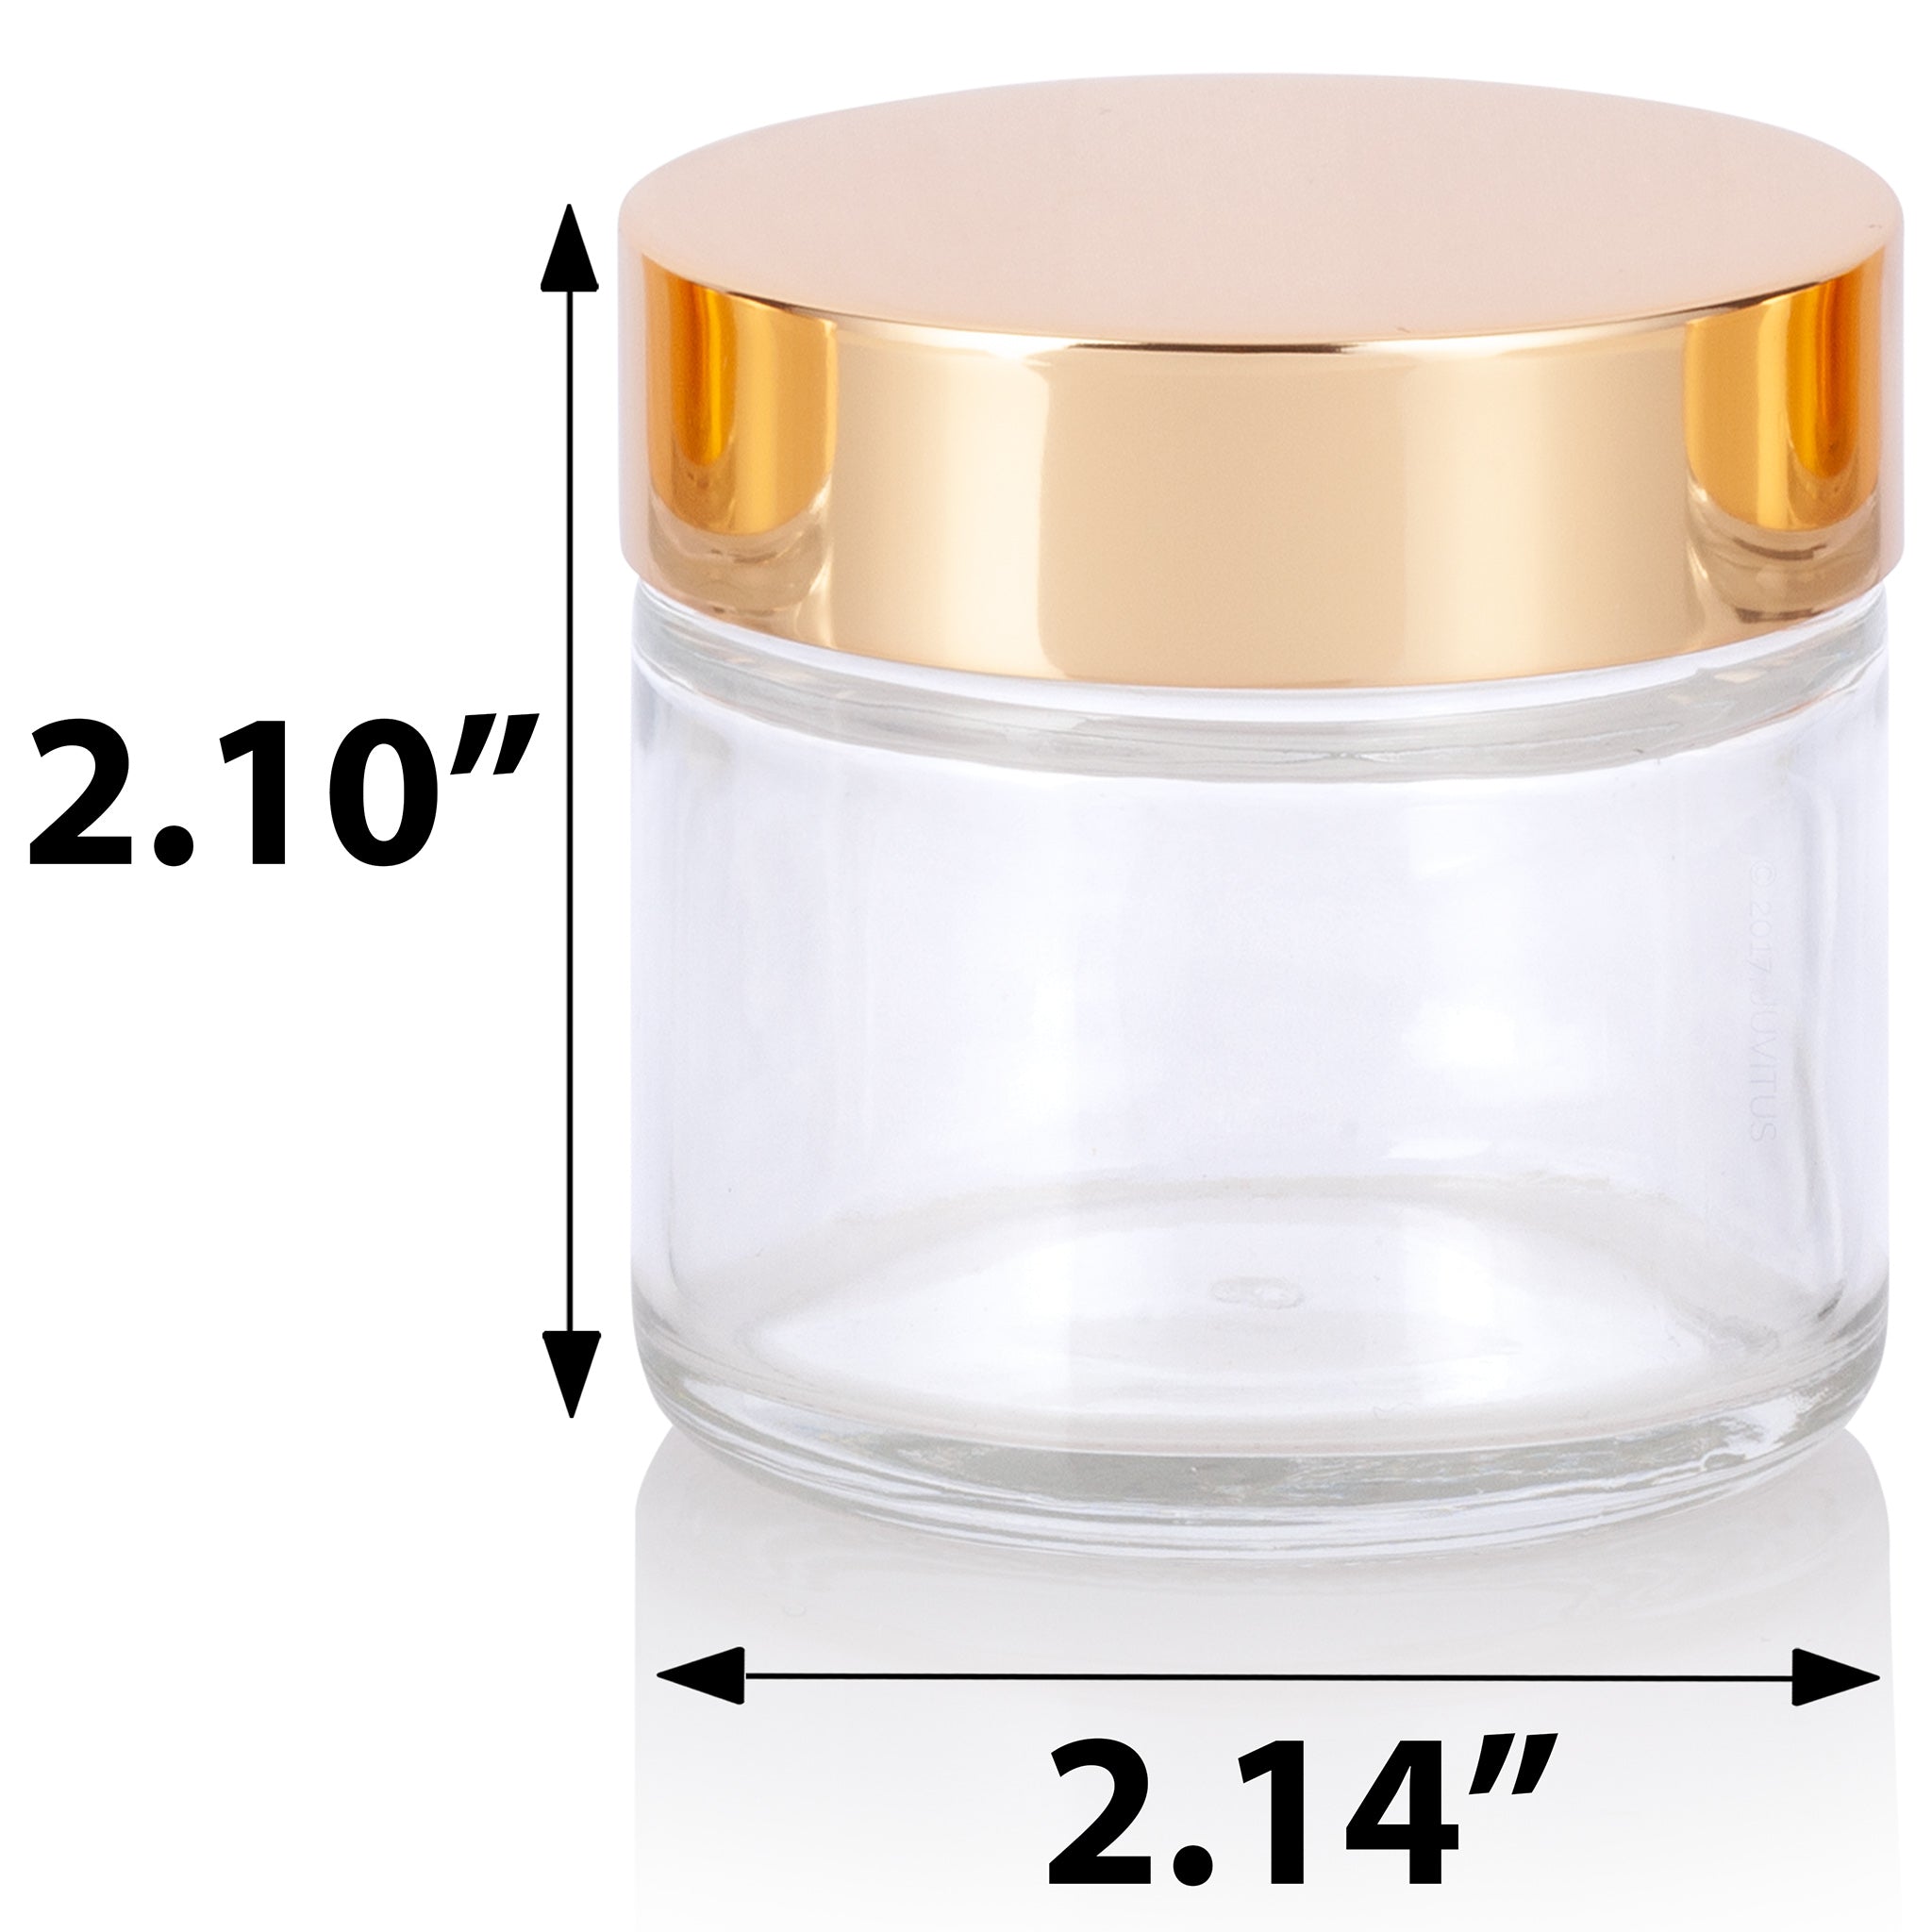 128oz Glass Jar with Metal Lid - Threshold™